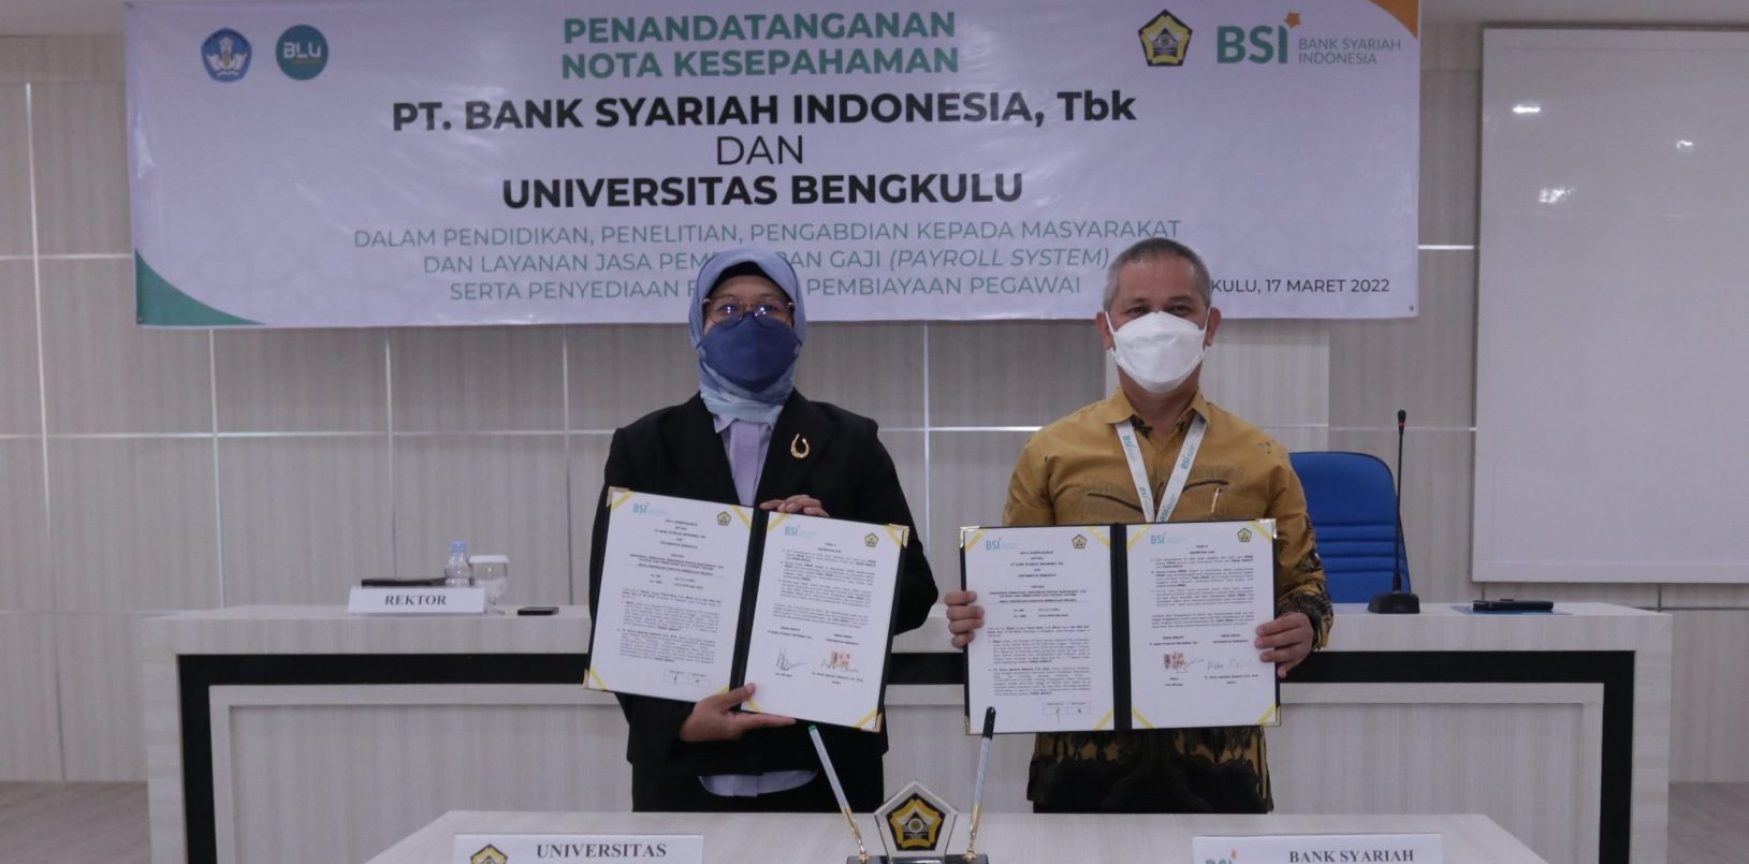 Penandatanganan MoU antara Universitas Bengkulu dengan PT. Bank Syariah Indonesia, Tbk